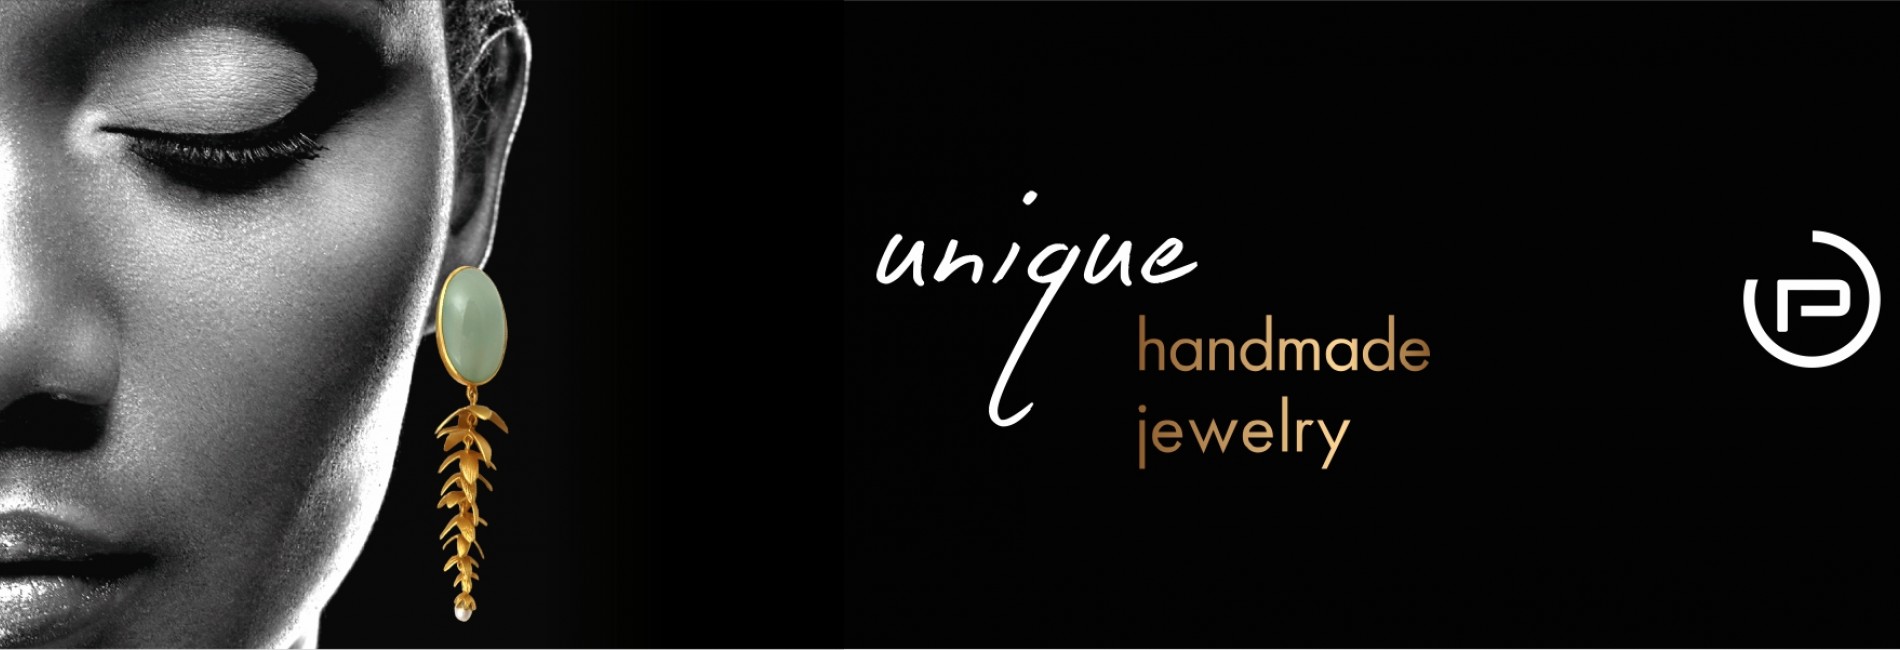 handmade jewelry